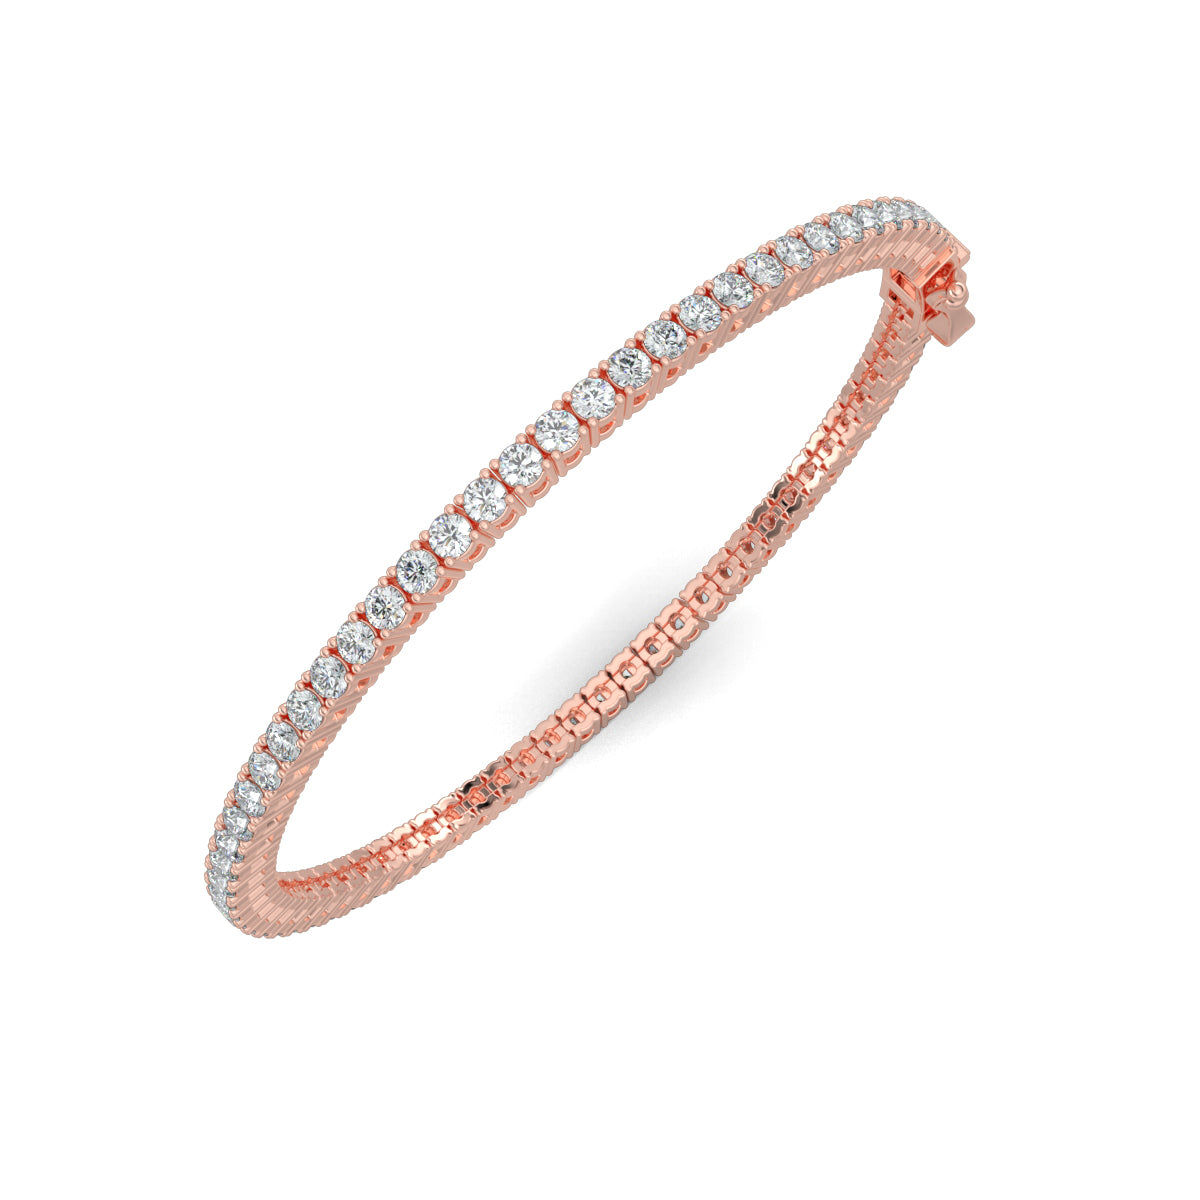 Rose Gold, Diamond Bracelet, Natural diamond bracelet, Lab-grown diamond bracelet, 20-Pointer Tennis Bracelet, tennis bracelet, prong setting, jewelry